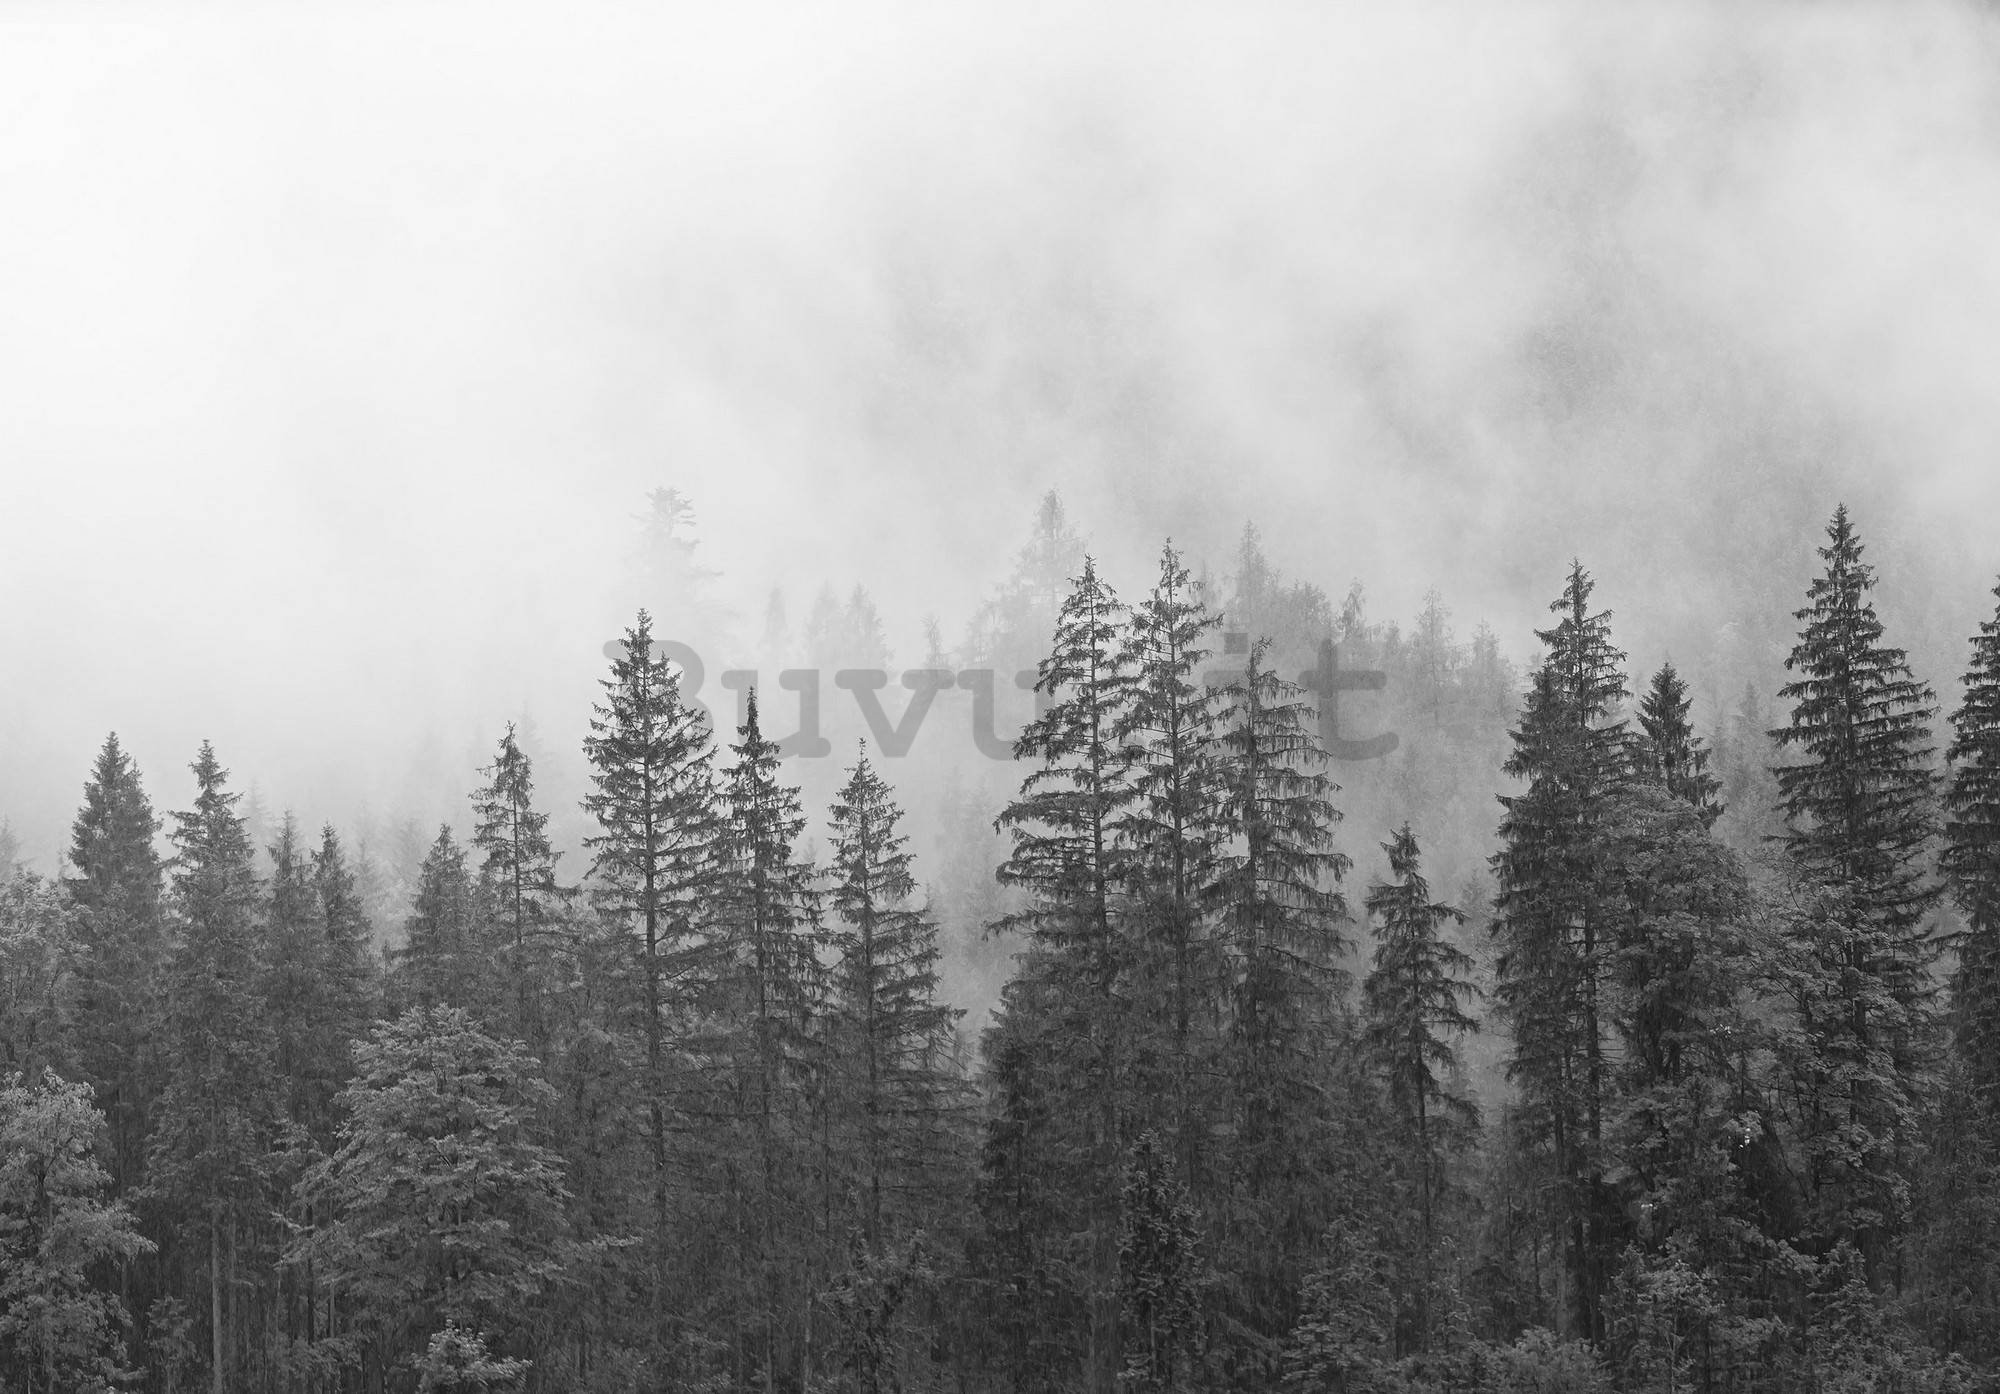 Fotomurale in TNT: Nebbia sopra la foresta bianca e nera - 368x254 cm